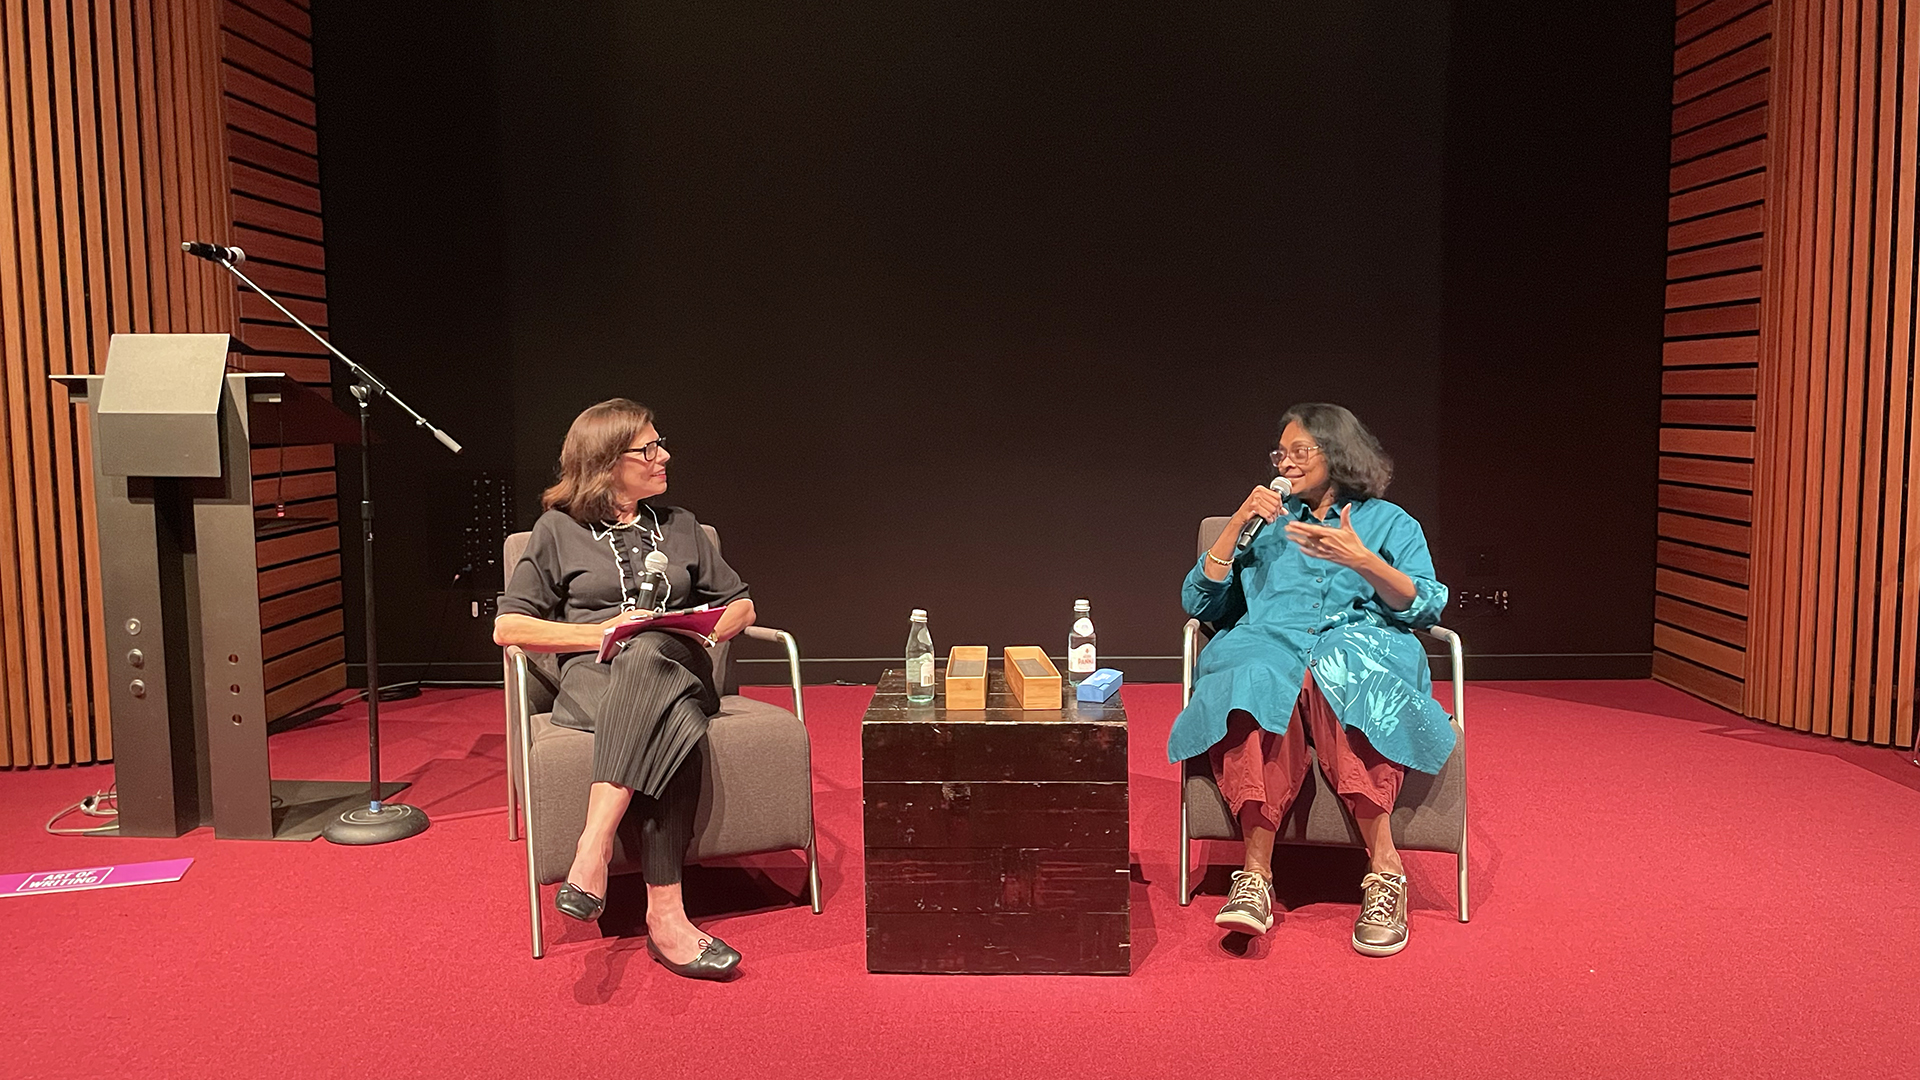 Sonali Deraniyagala and Ramona Naddaff talk on stage for a UC Berkeley event